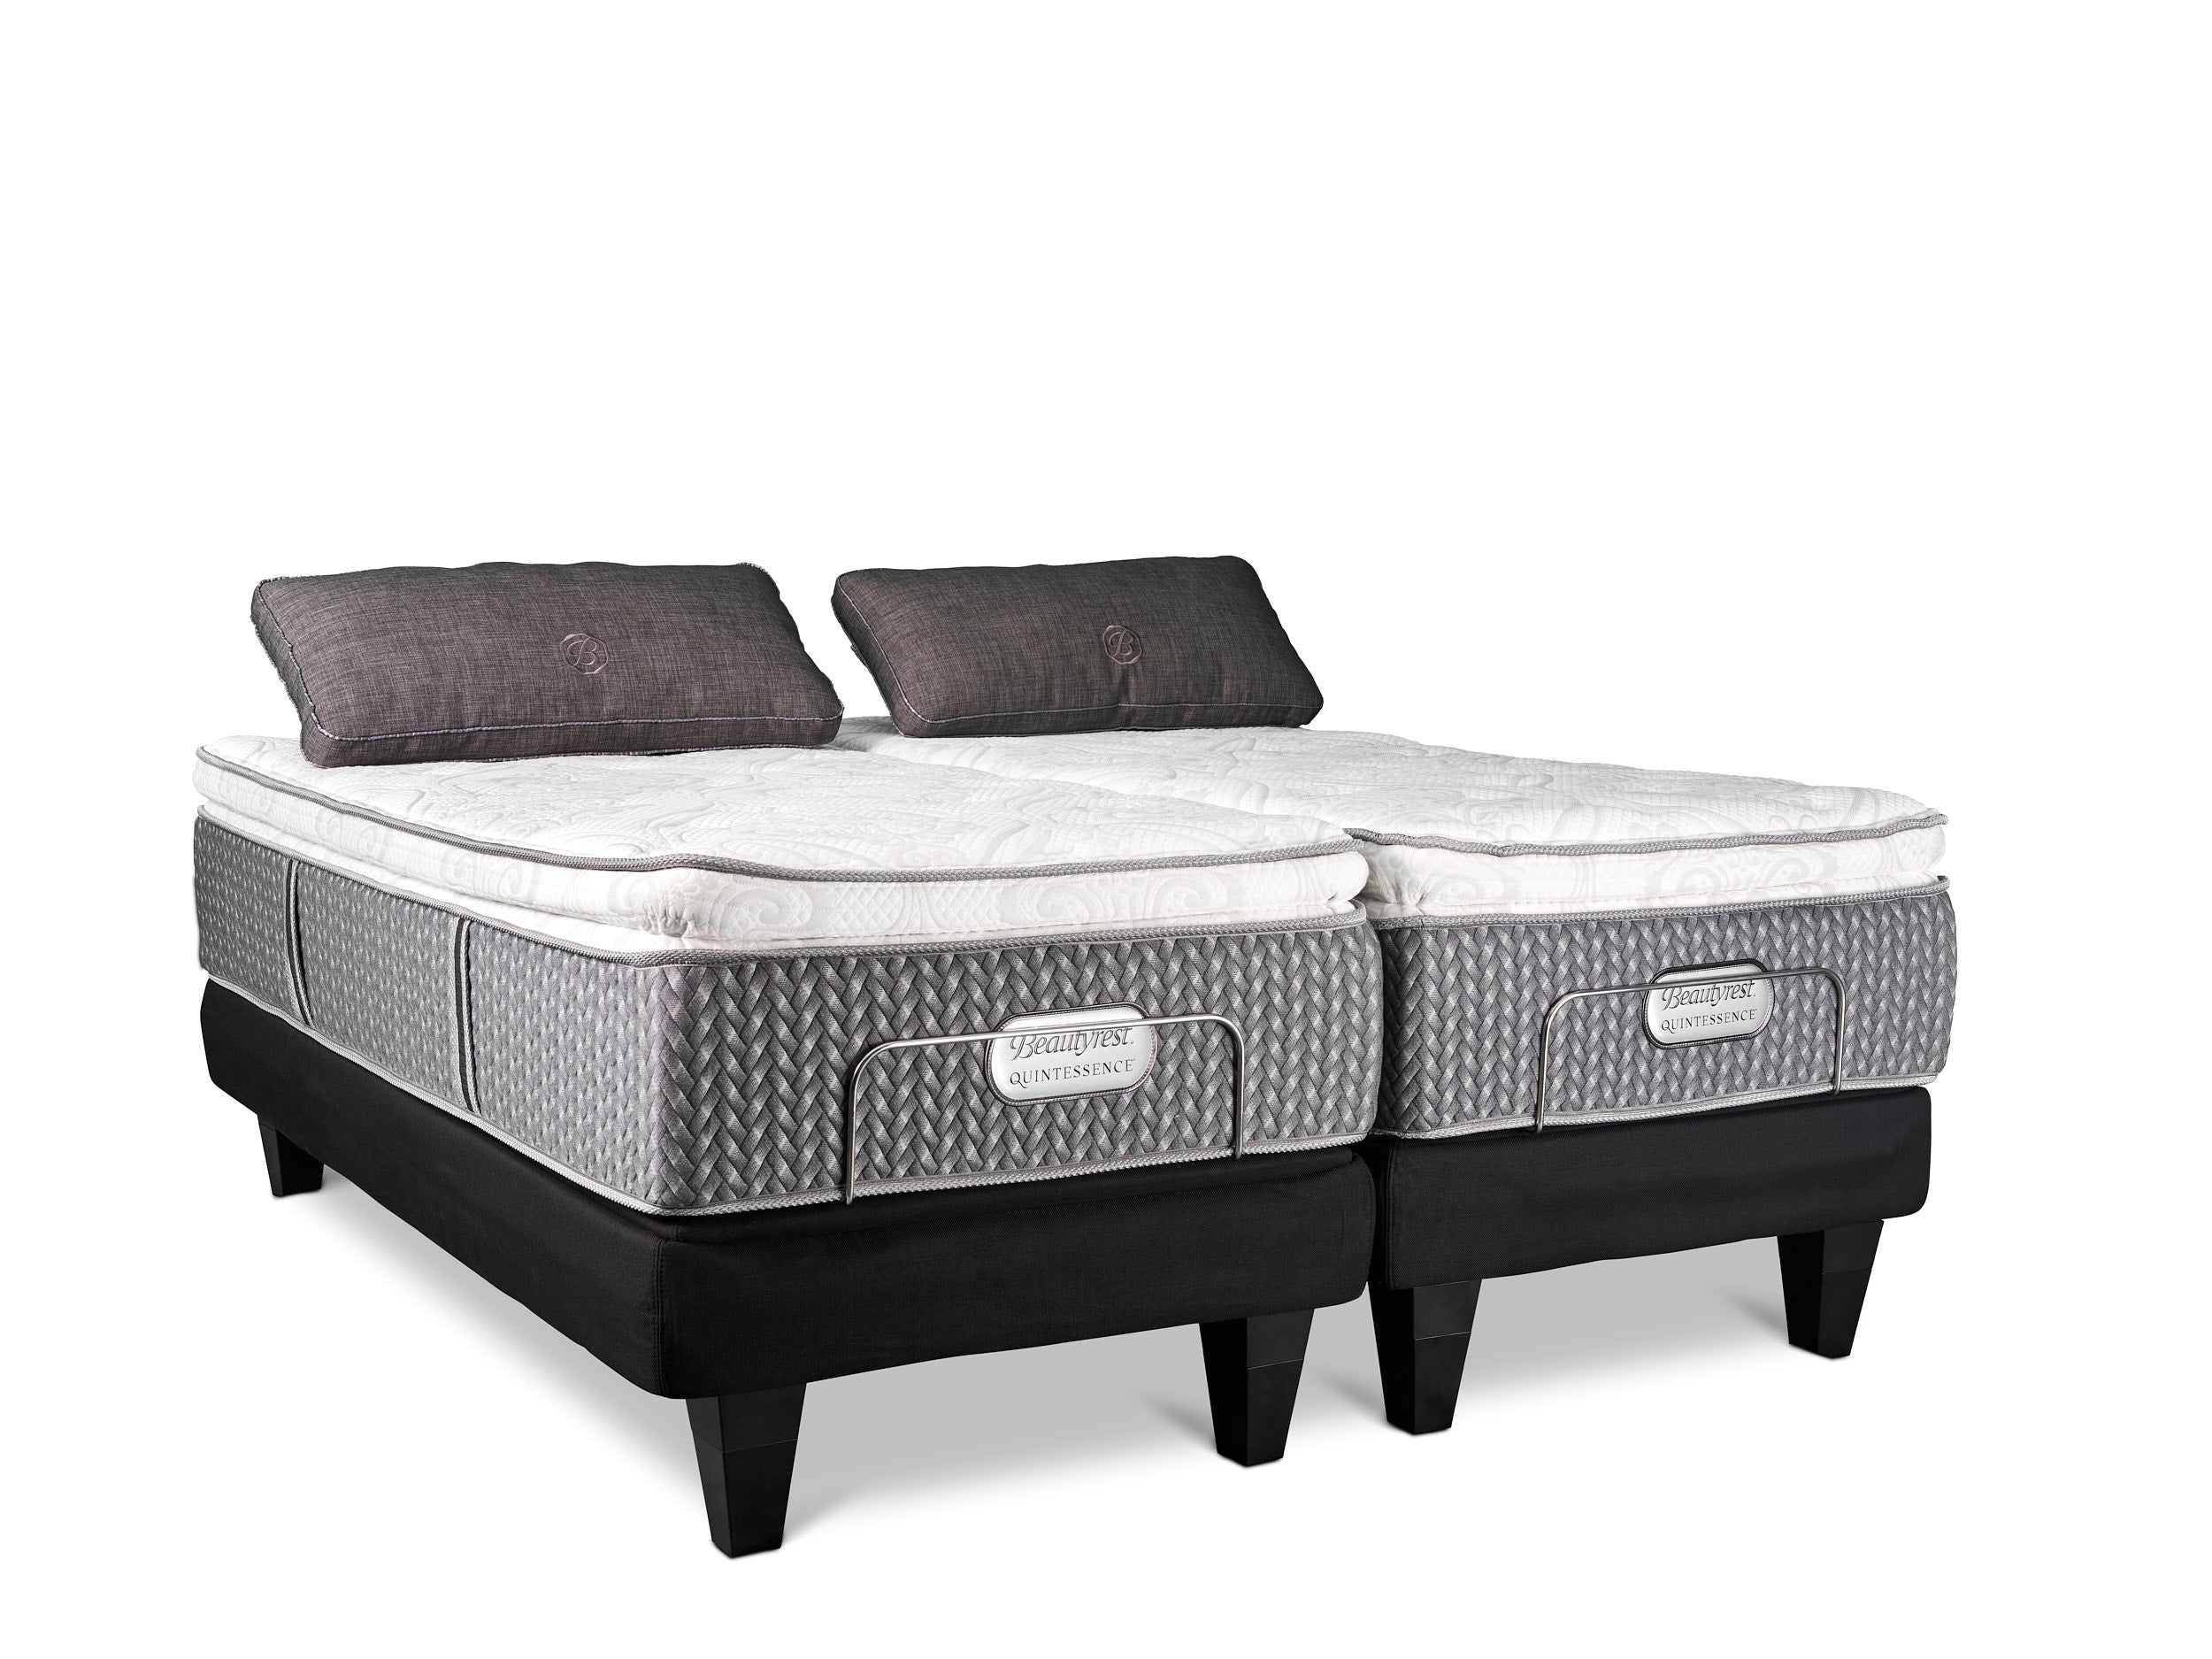 Beautyrest Quintessence Platinum Eurotop Split King Adjustable Bed